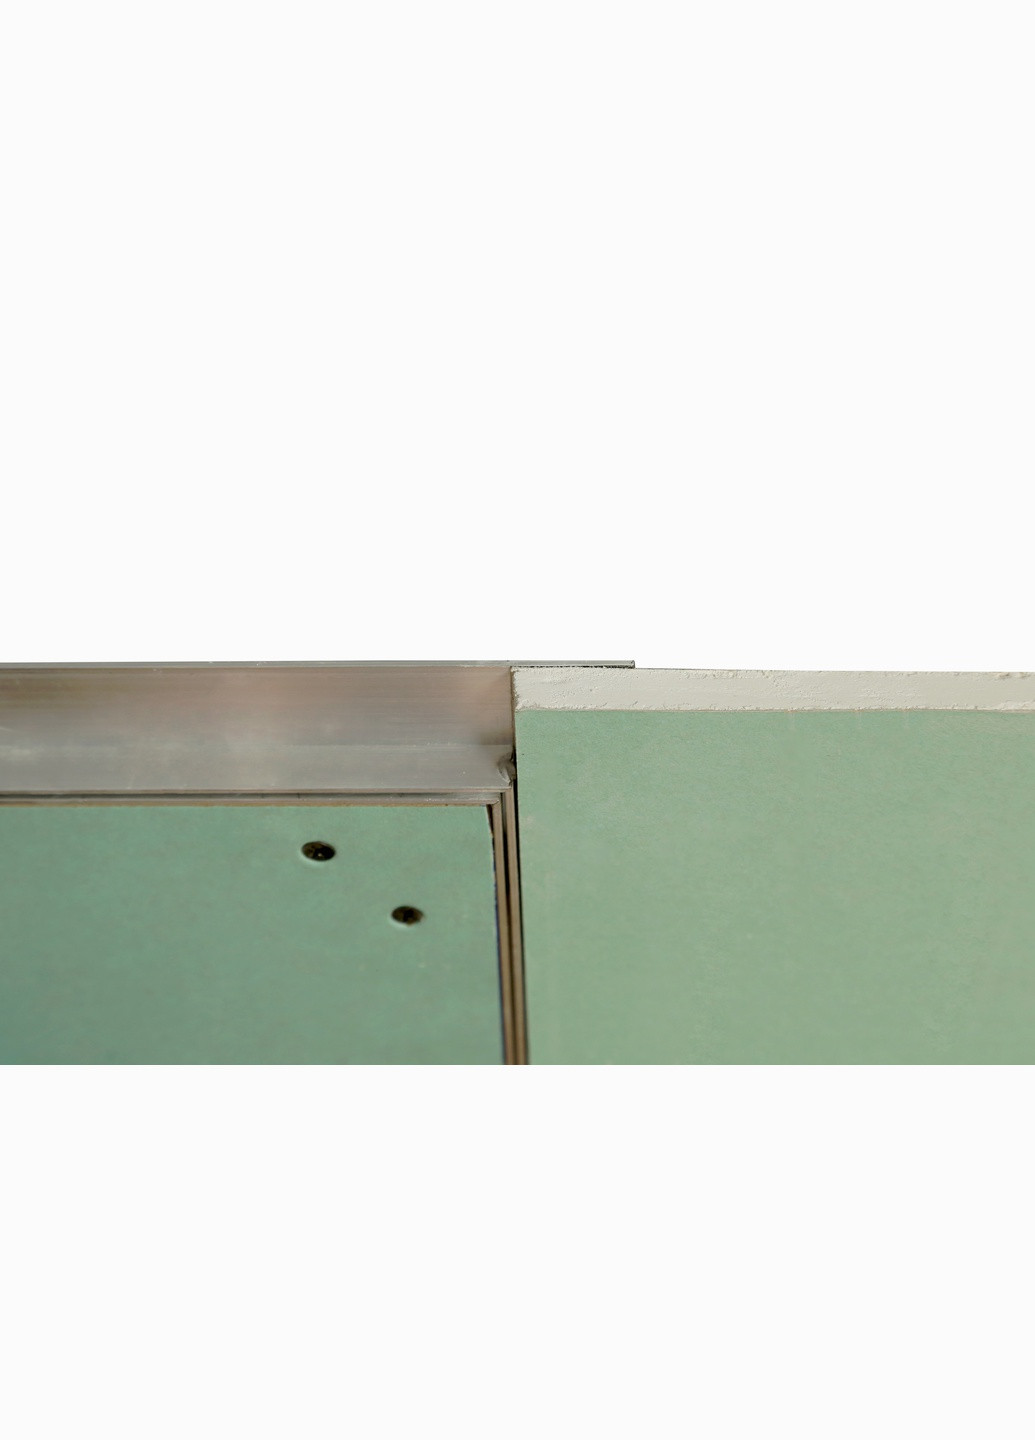 Ревизионный люк скрытого монтажа под покраску (поклейку обоев) типа СТАНДАРТ 500x1000 (1410) S-Dom (264209610)